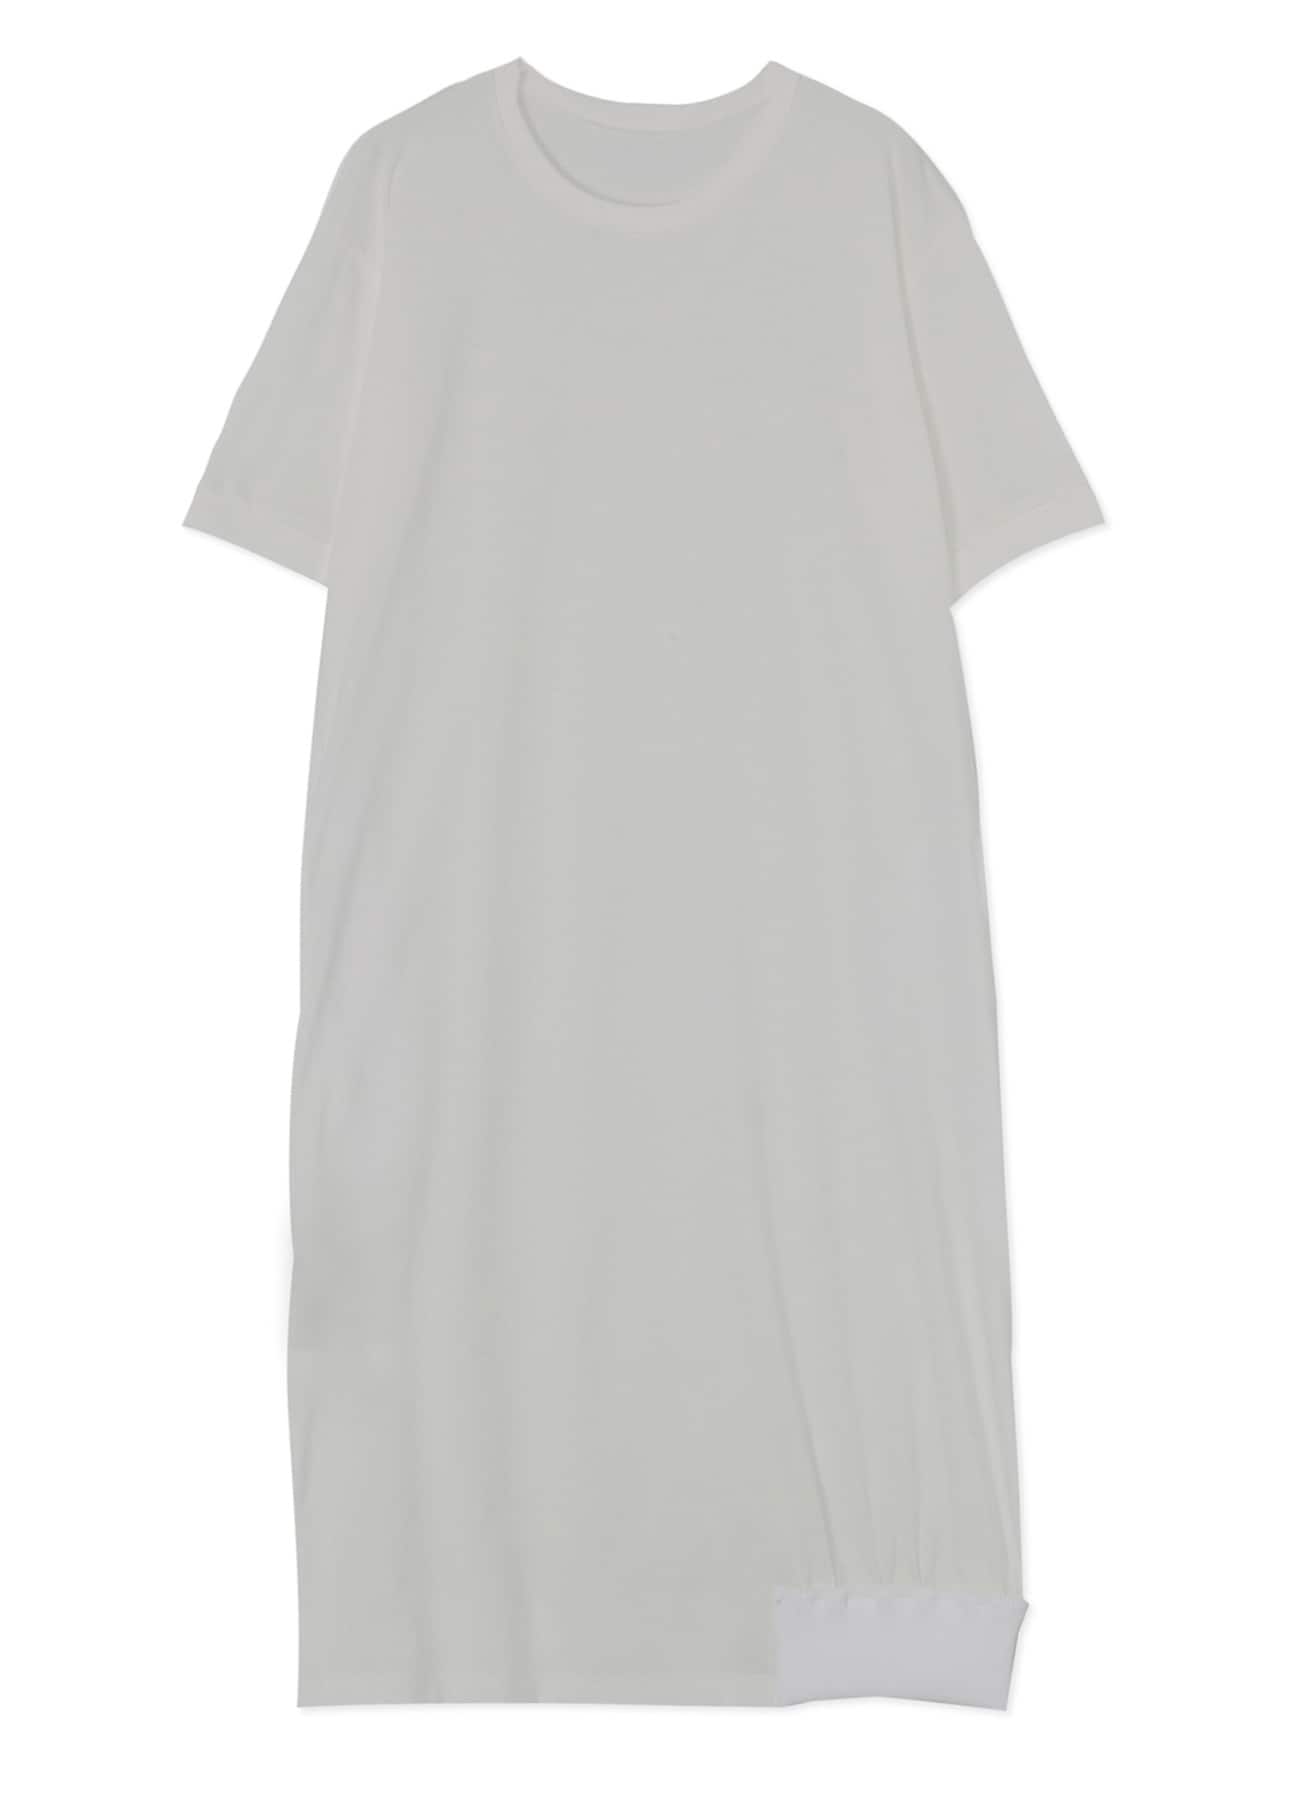 30/ Cotton Jersey Dress with Uneven Hemline